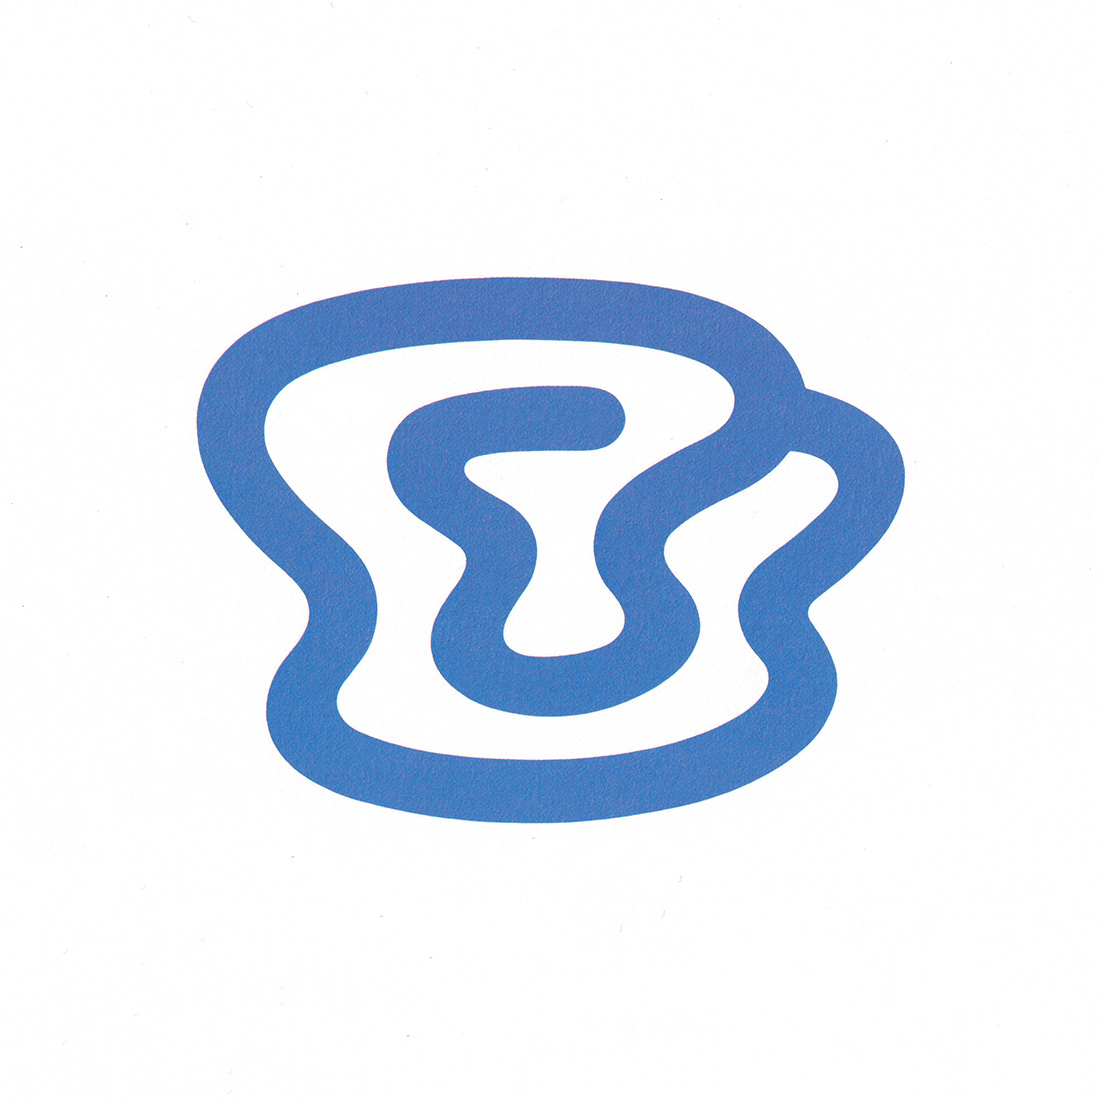 Urban Frontier – Tokyo '96 logo design by Ikko Tanaka, 1991